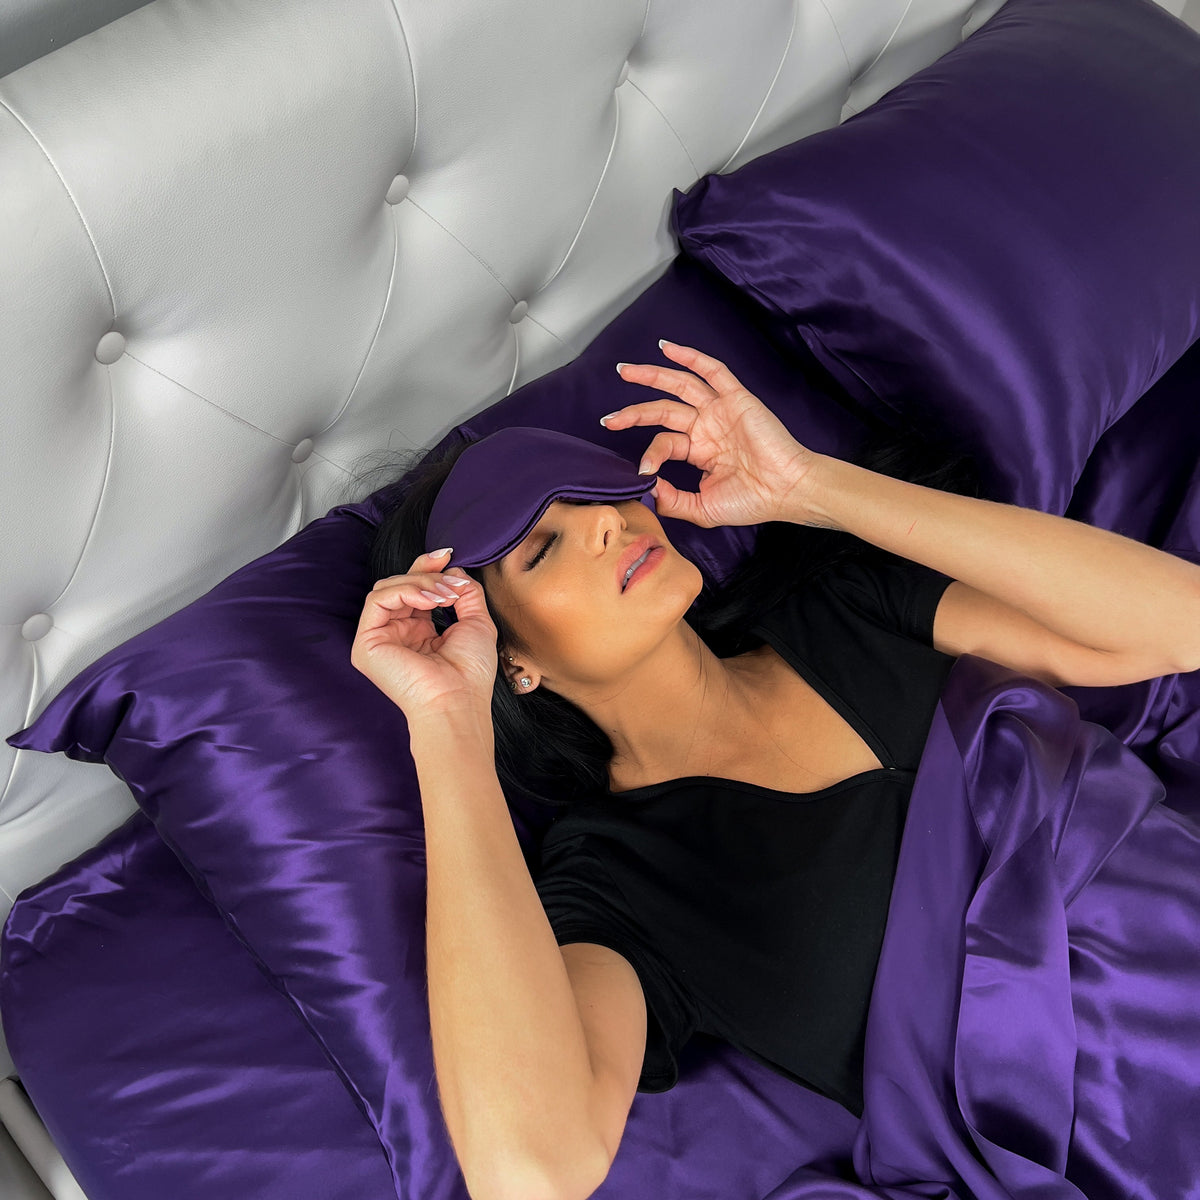 A woman waking up on dark purple silk sheets, slightly lifting her sleep mask off